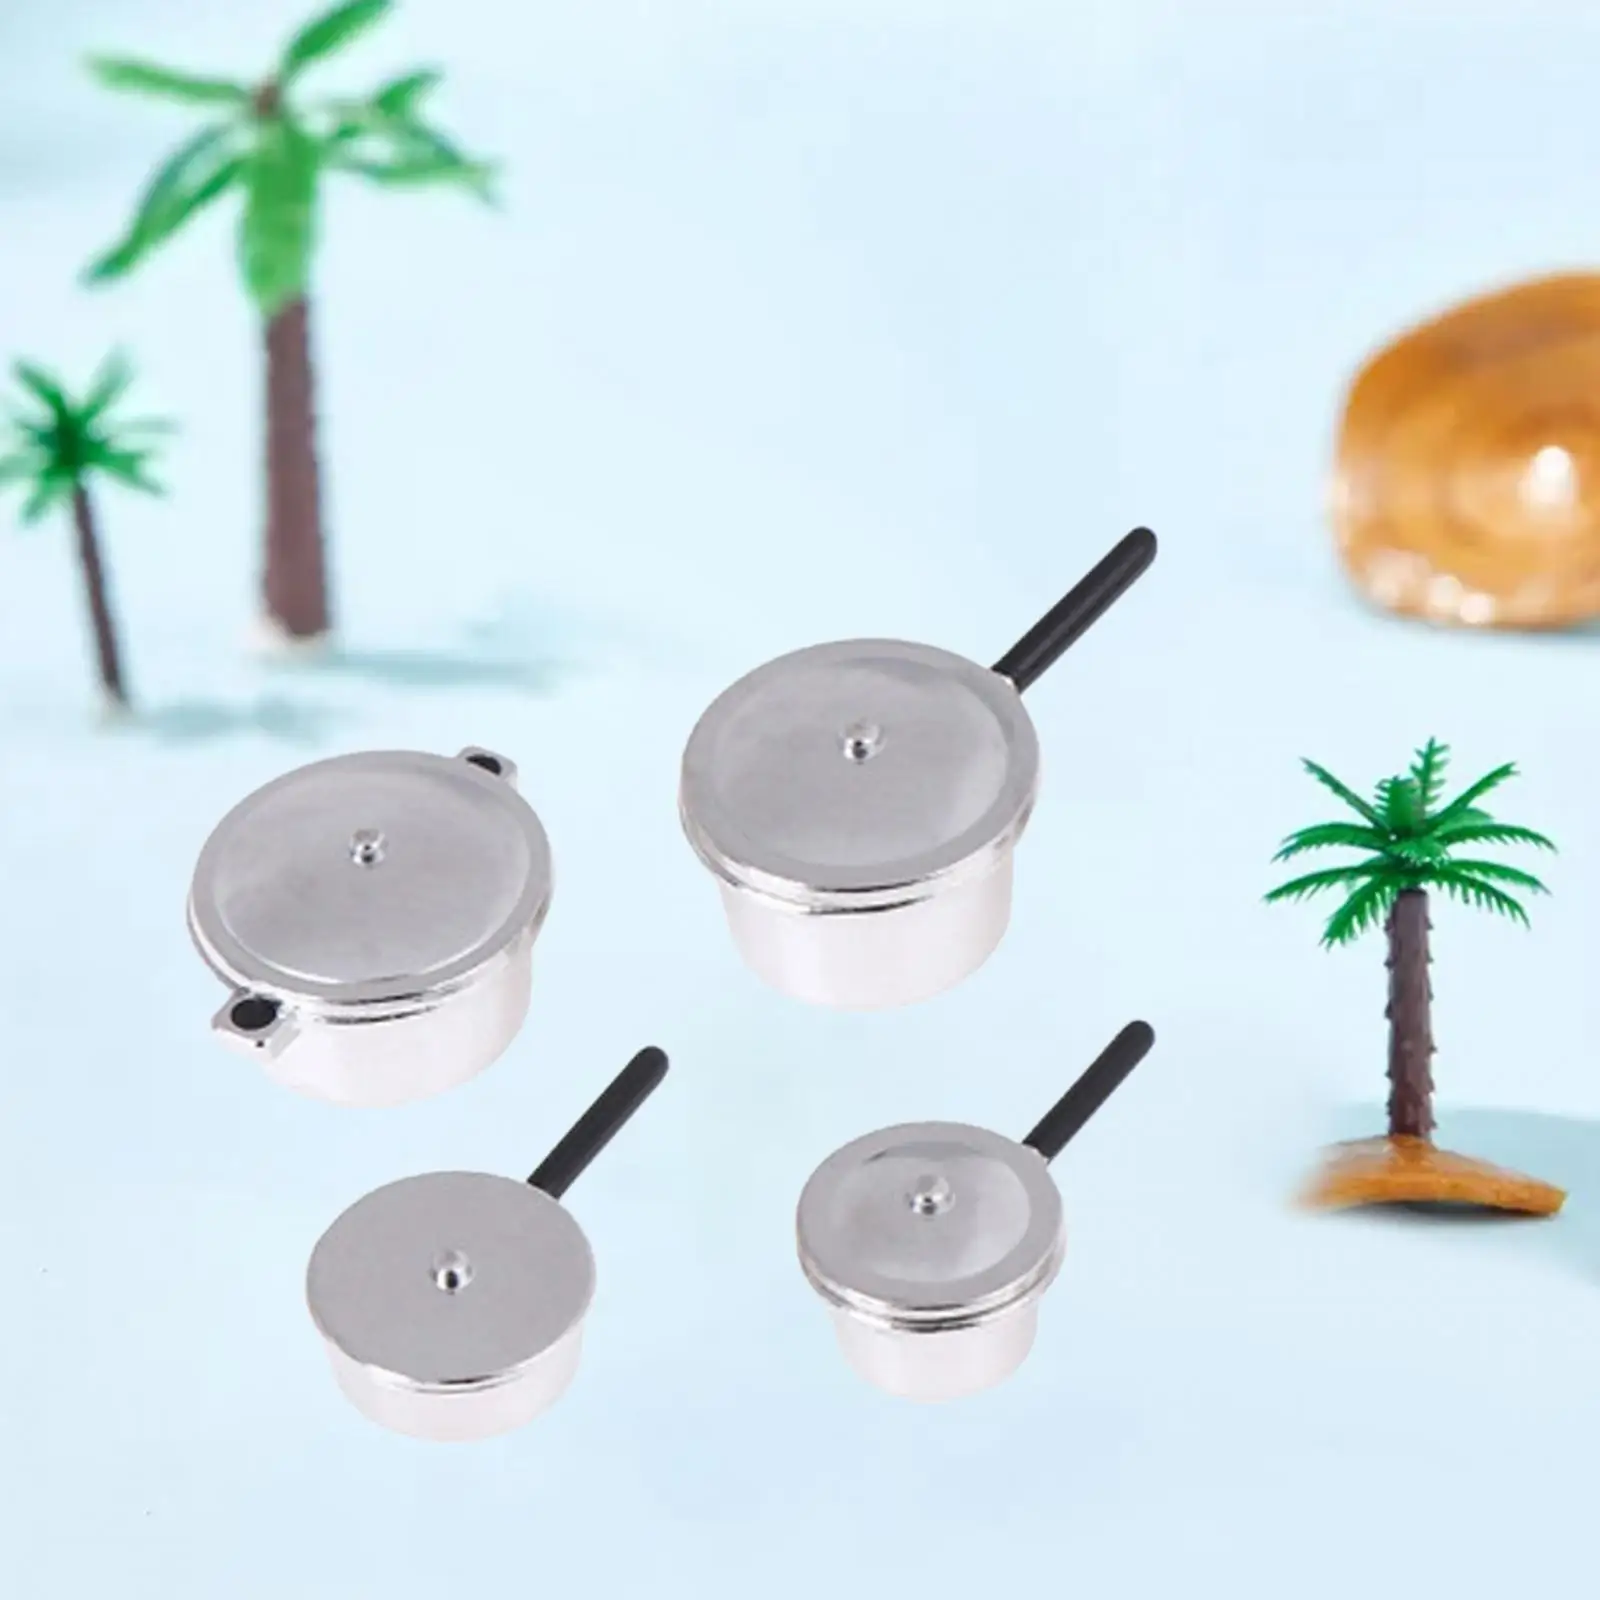 4 Pieces 1:12 Dollhouse Pots and Pans Scenes Mini Cooking Pan with Lids for Micro Landscape Miniature Scene Decoration Building